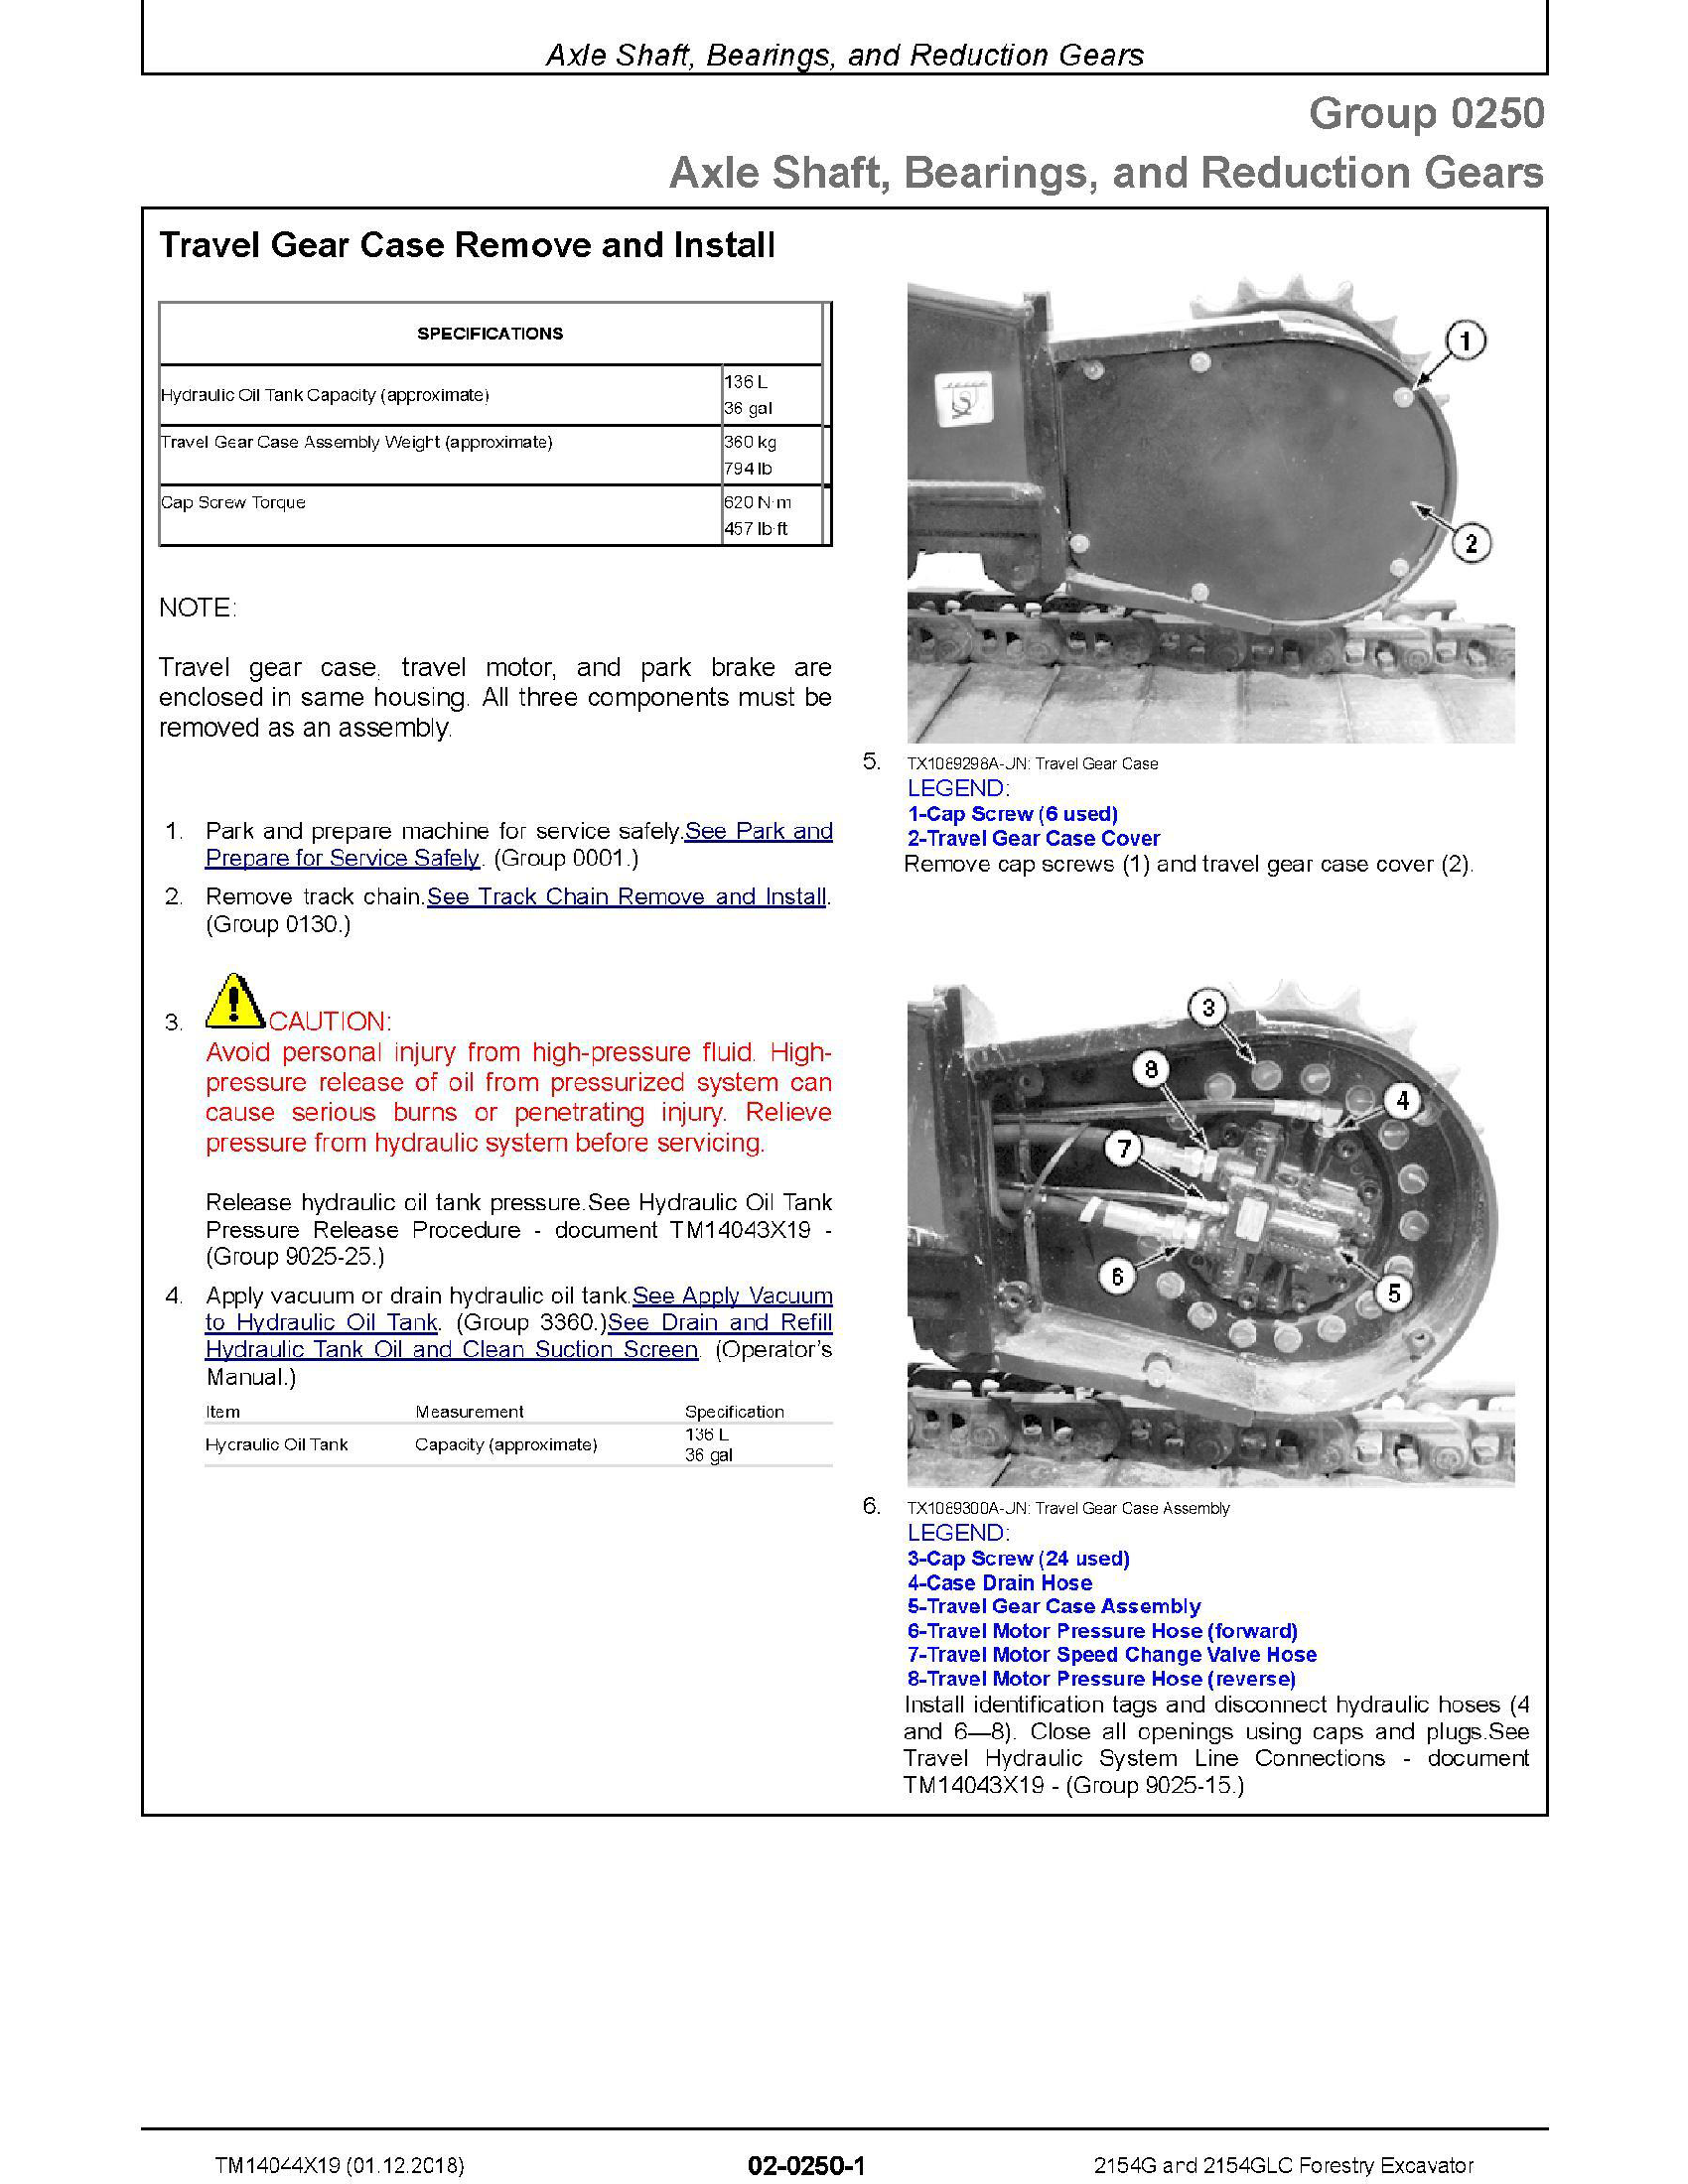 John Deere 2154GLC manual pdf